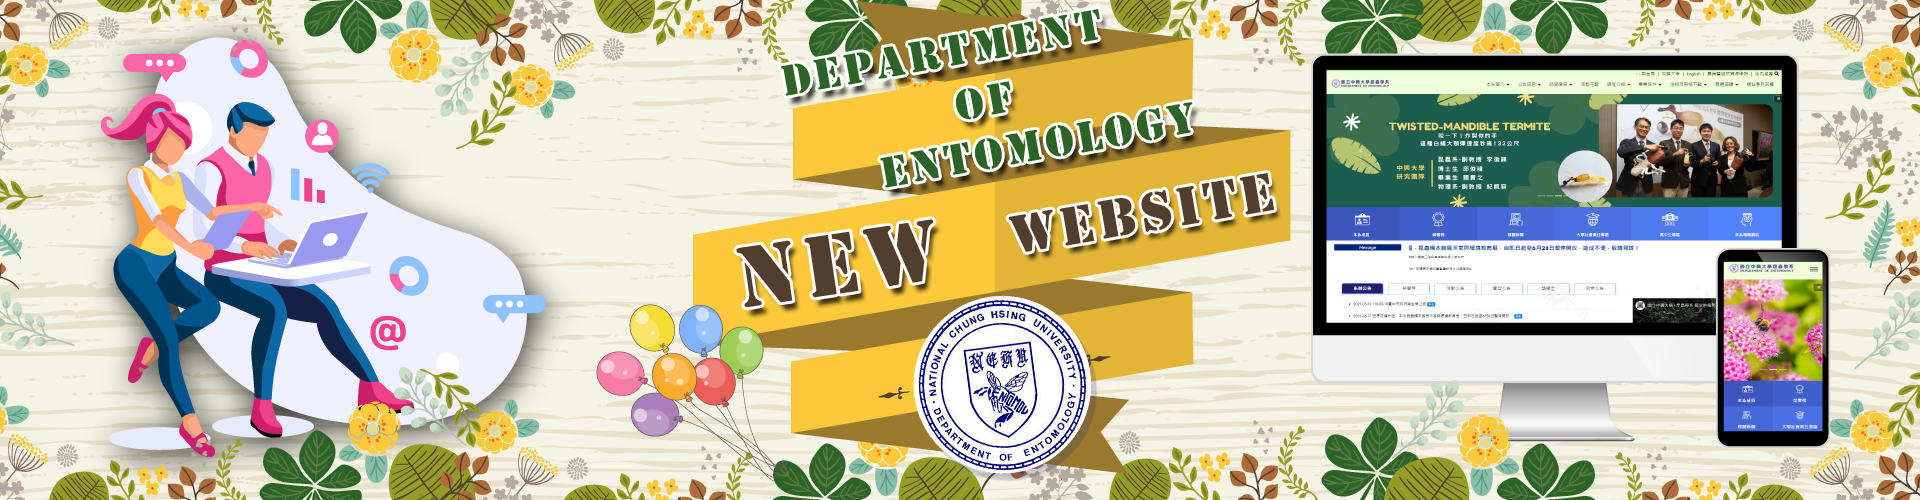 DEPARTMENT OF ENTOMOLOGY NEW WEBSITE